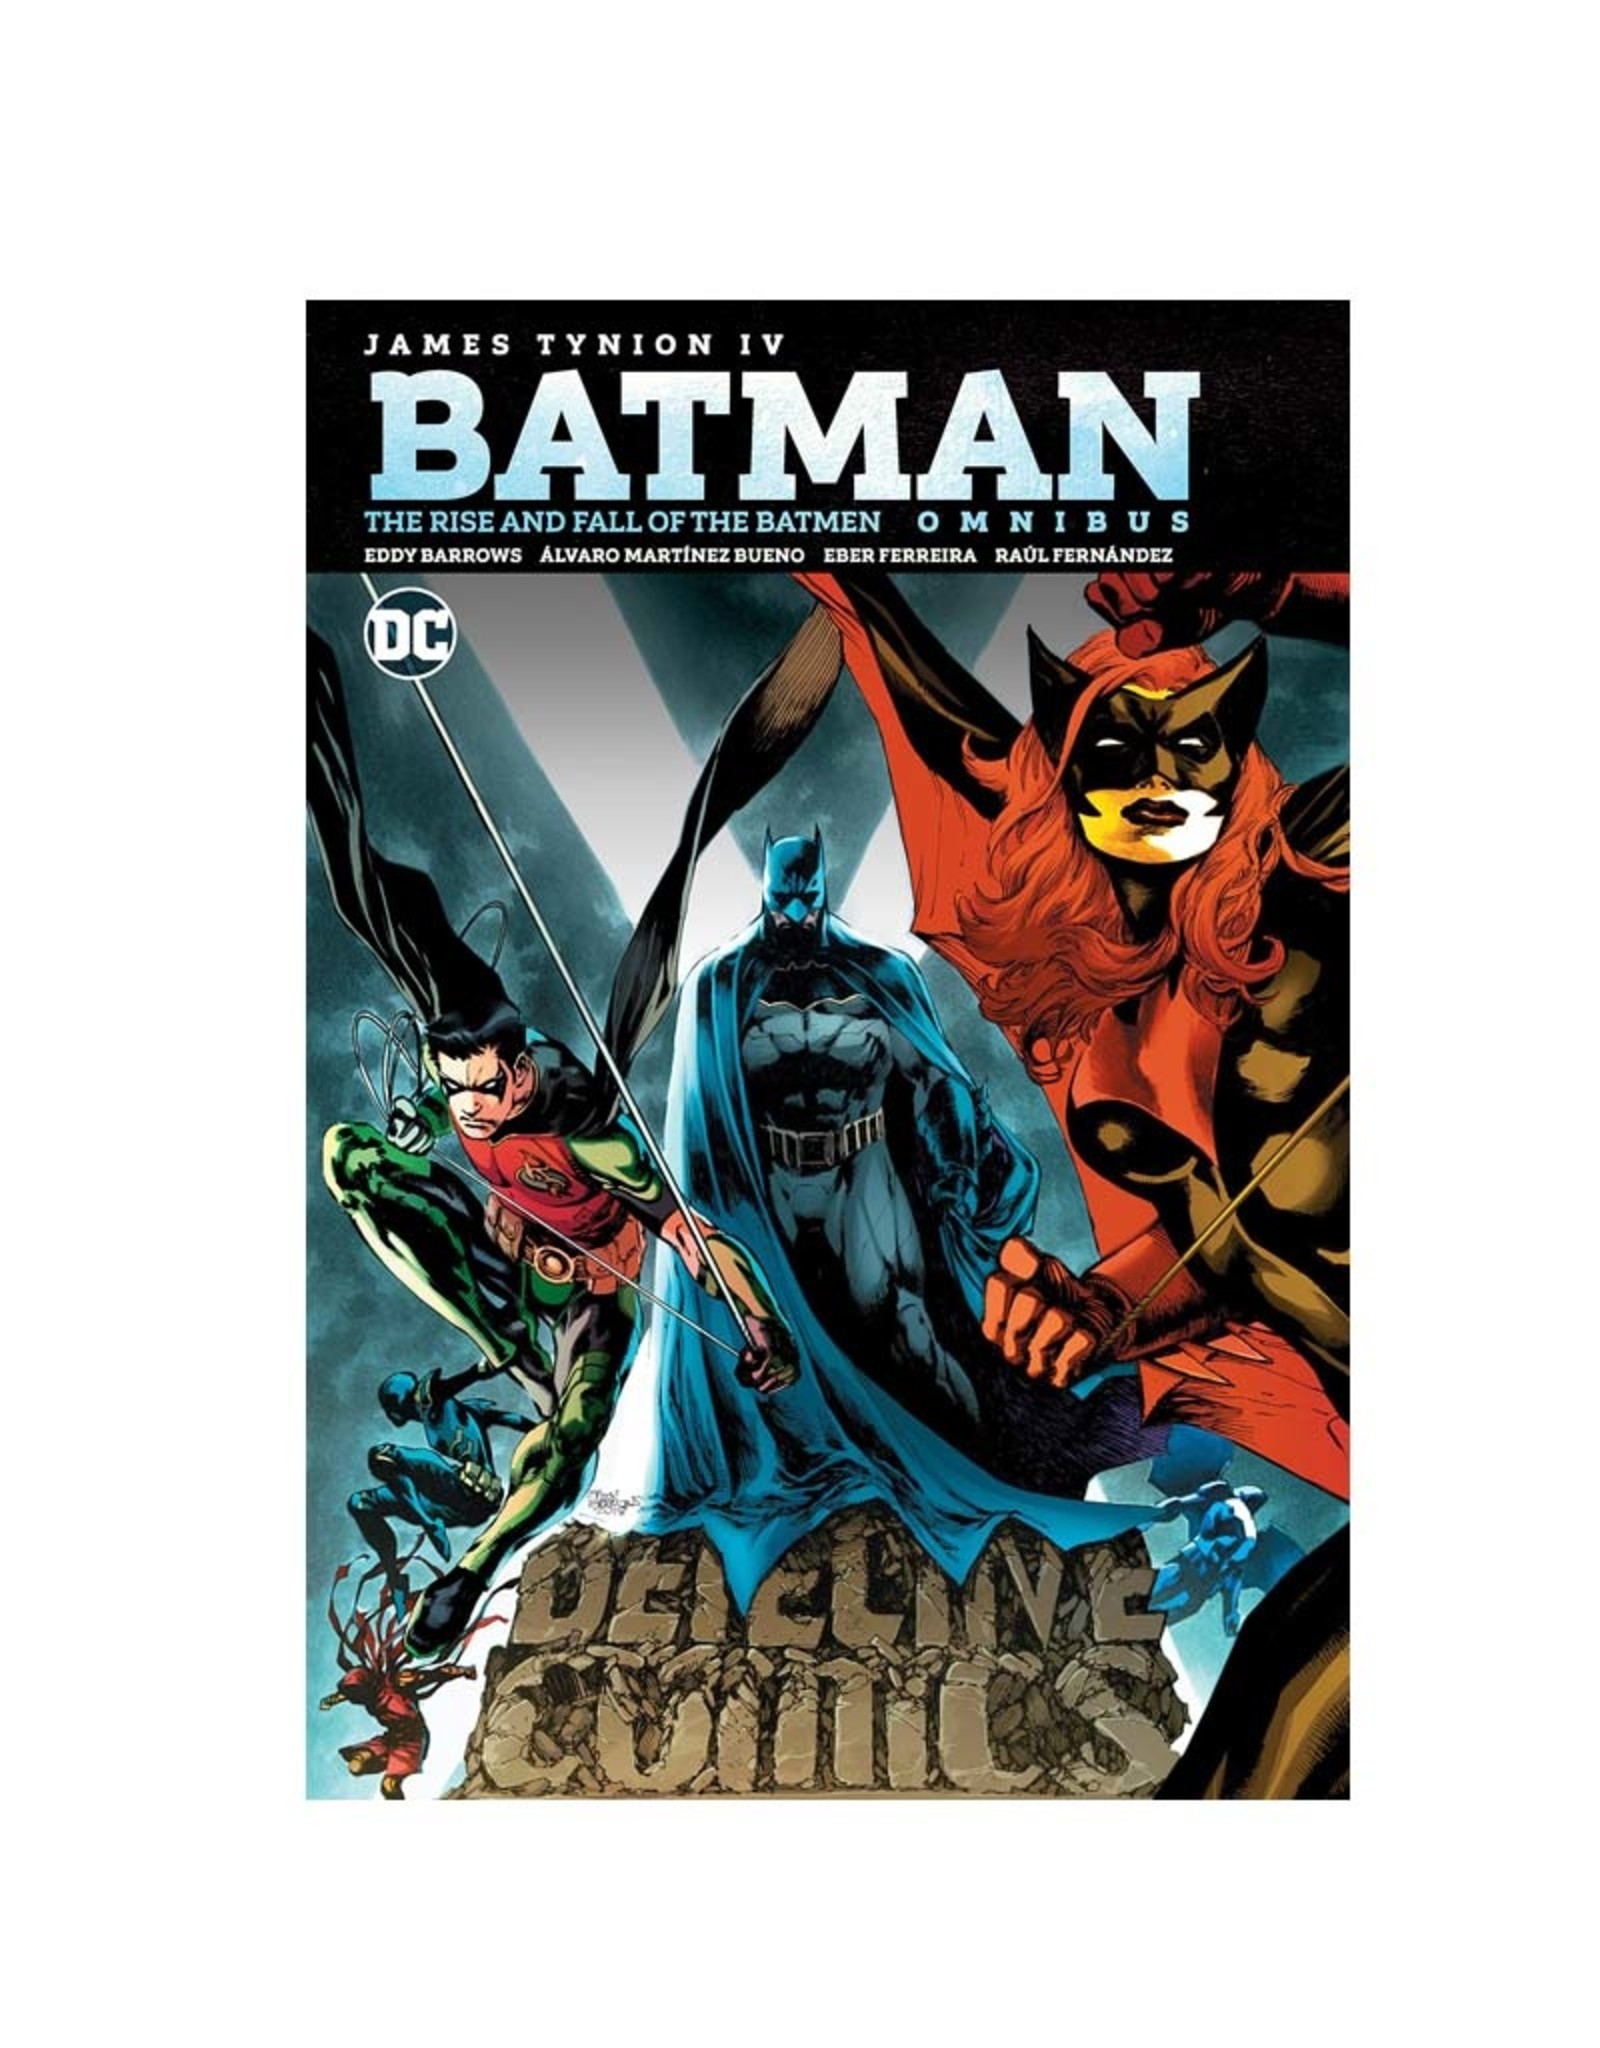 BATMAN THE RISE AND FALL OF THE BATMEN OMNIBUS HC - Zia Comics